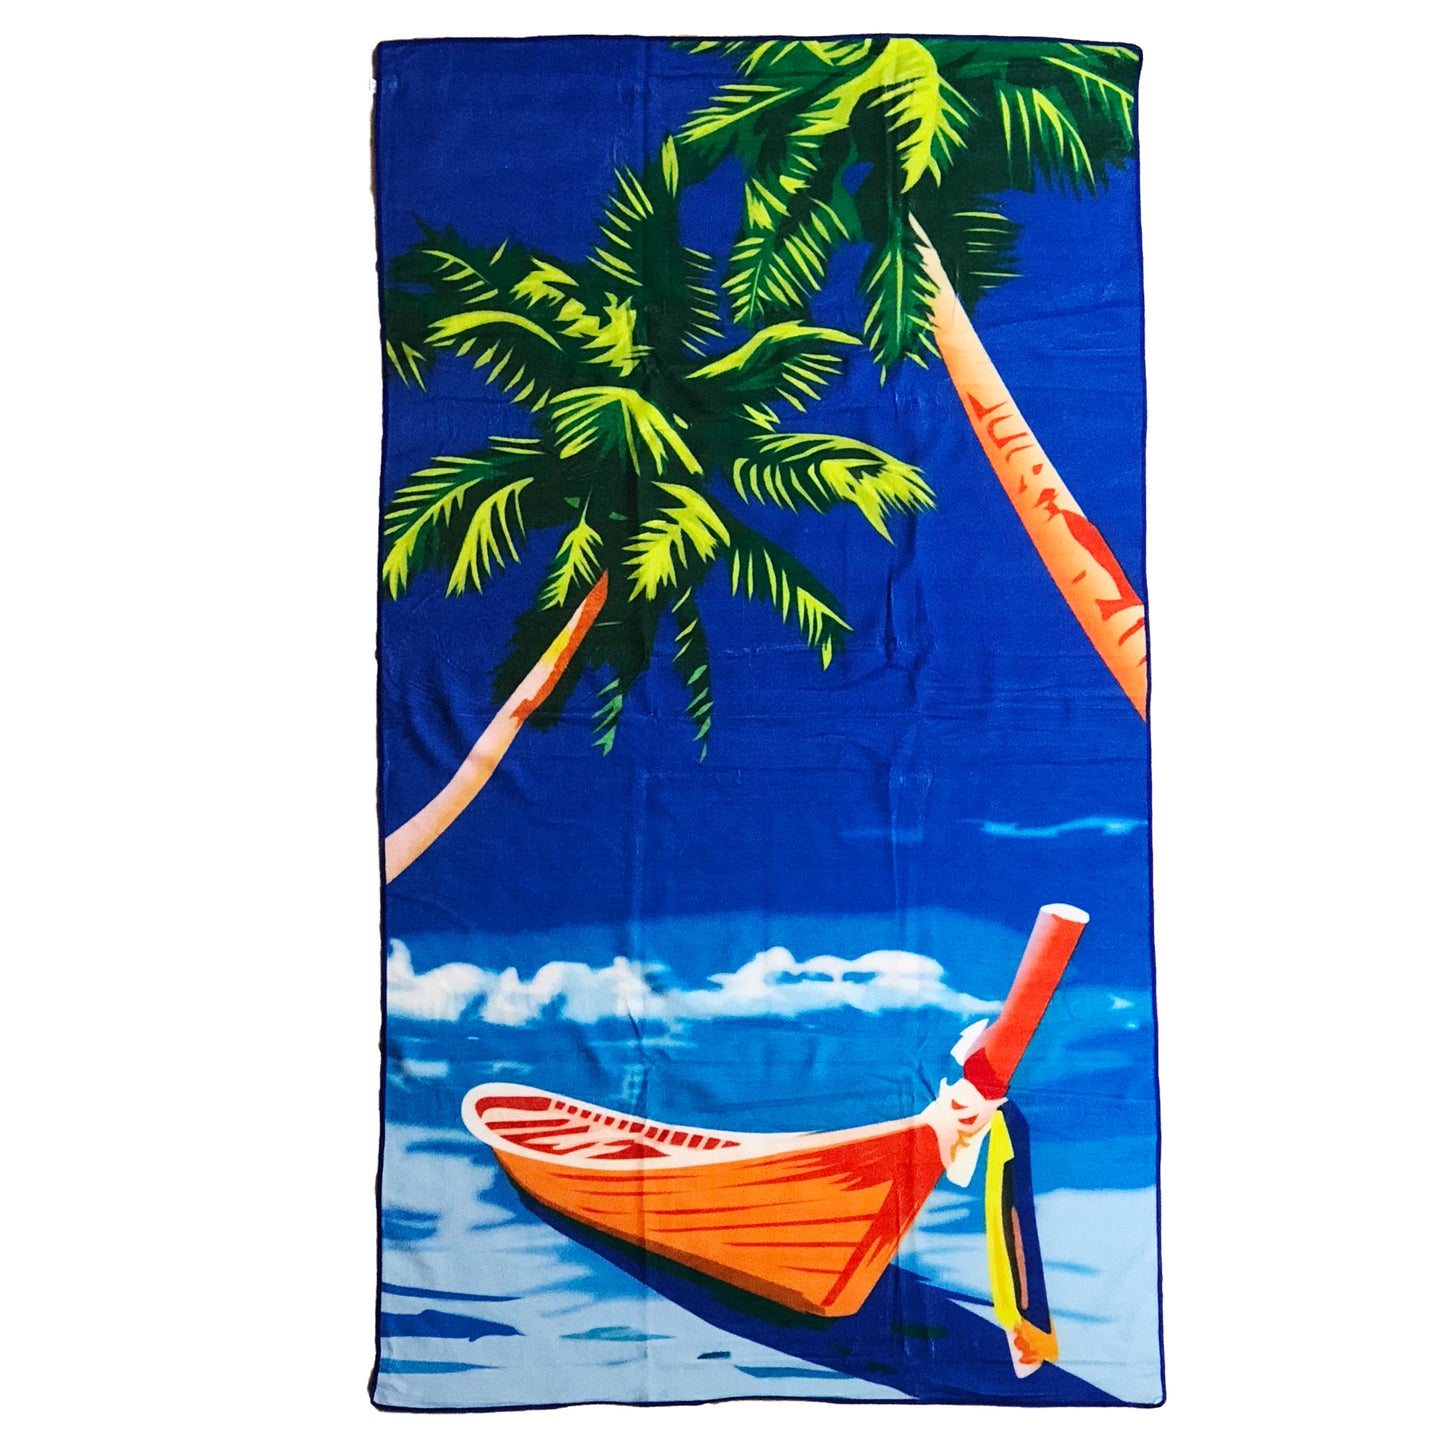 Allgala Oversize 40"x70" Microfiber Beach Towel, Boat - BT81108